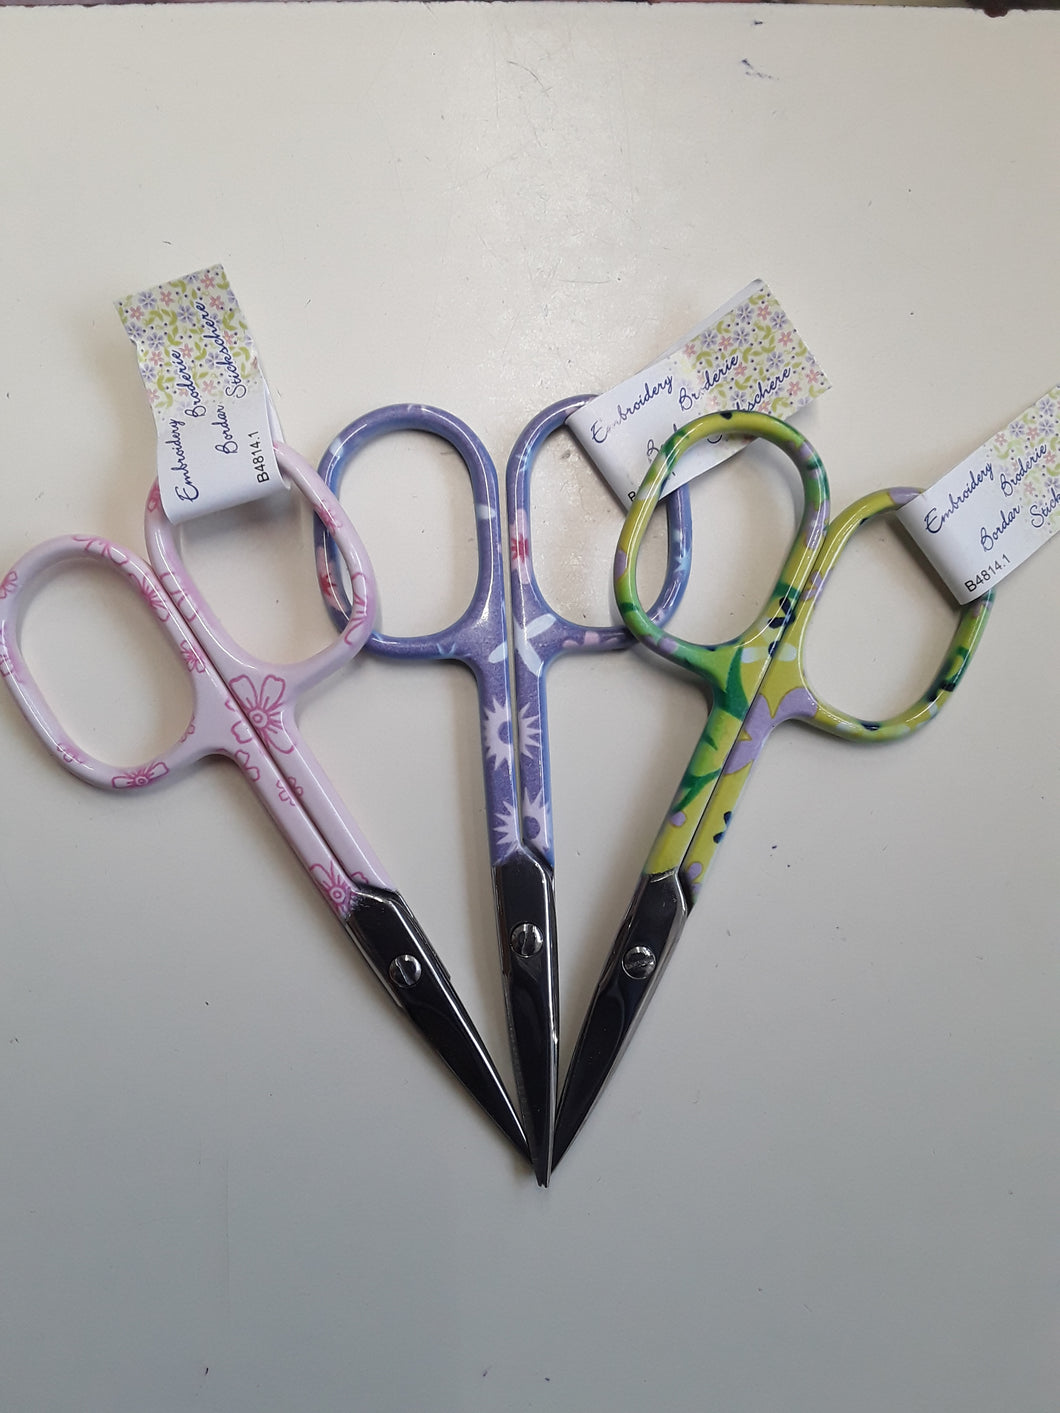 Flowery embroidery scissors